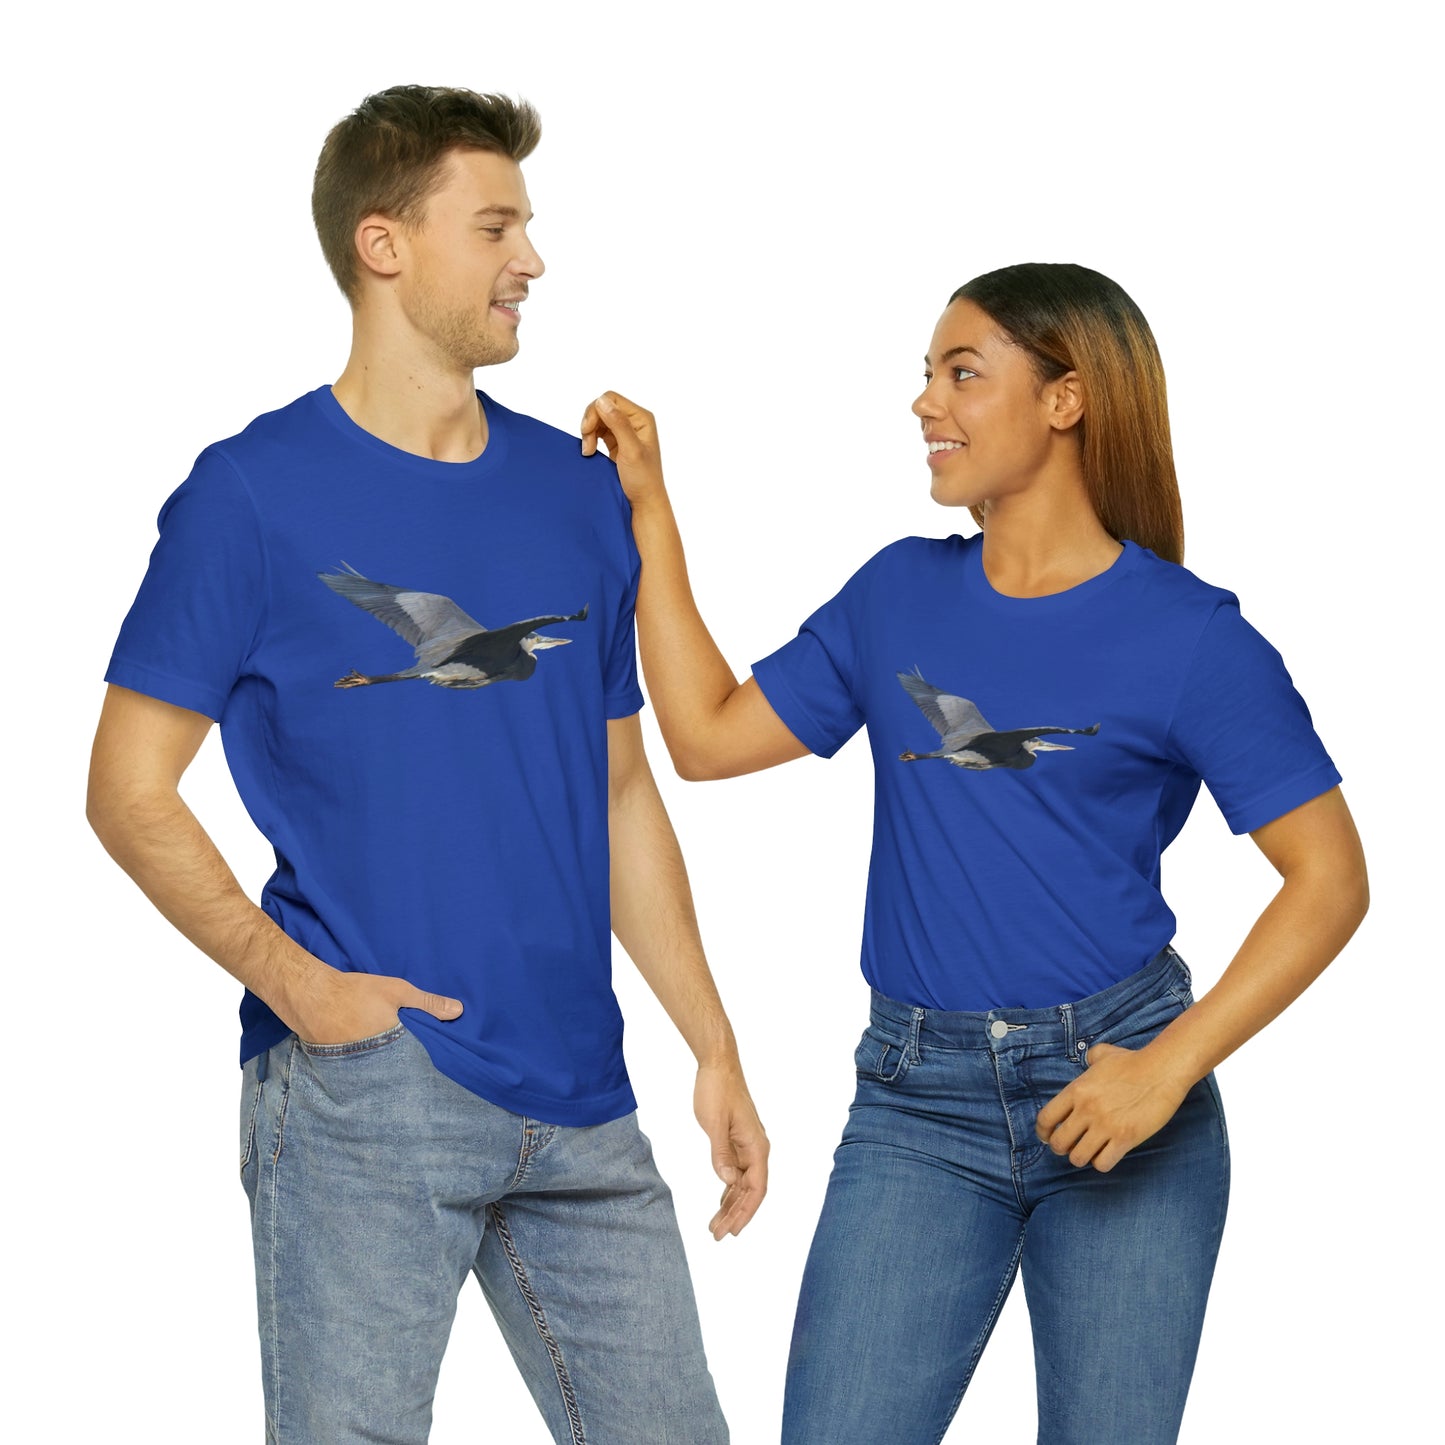 Great Blue Heron                           Unisex Jersey Short Sleeve Tee